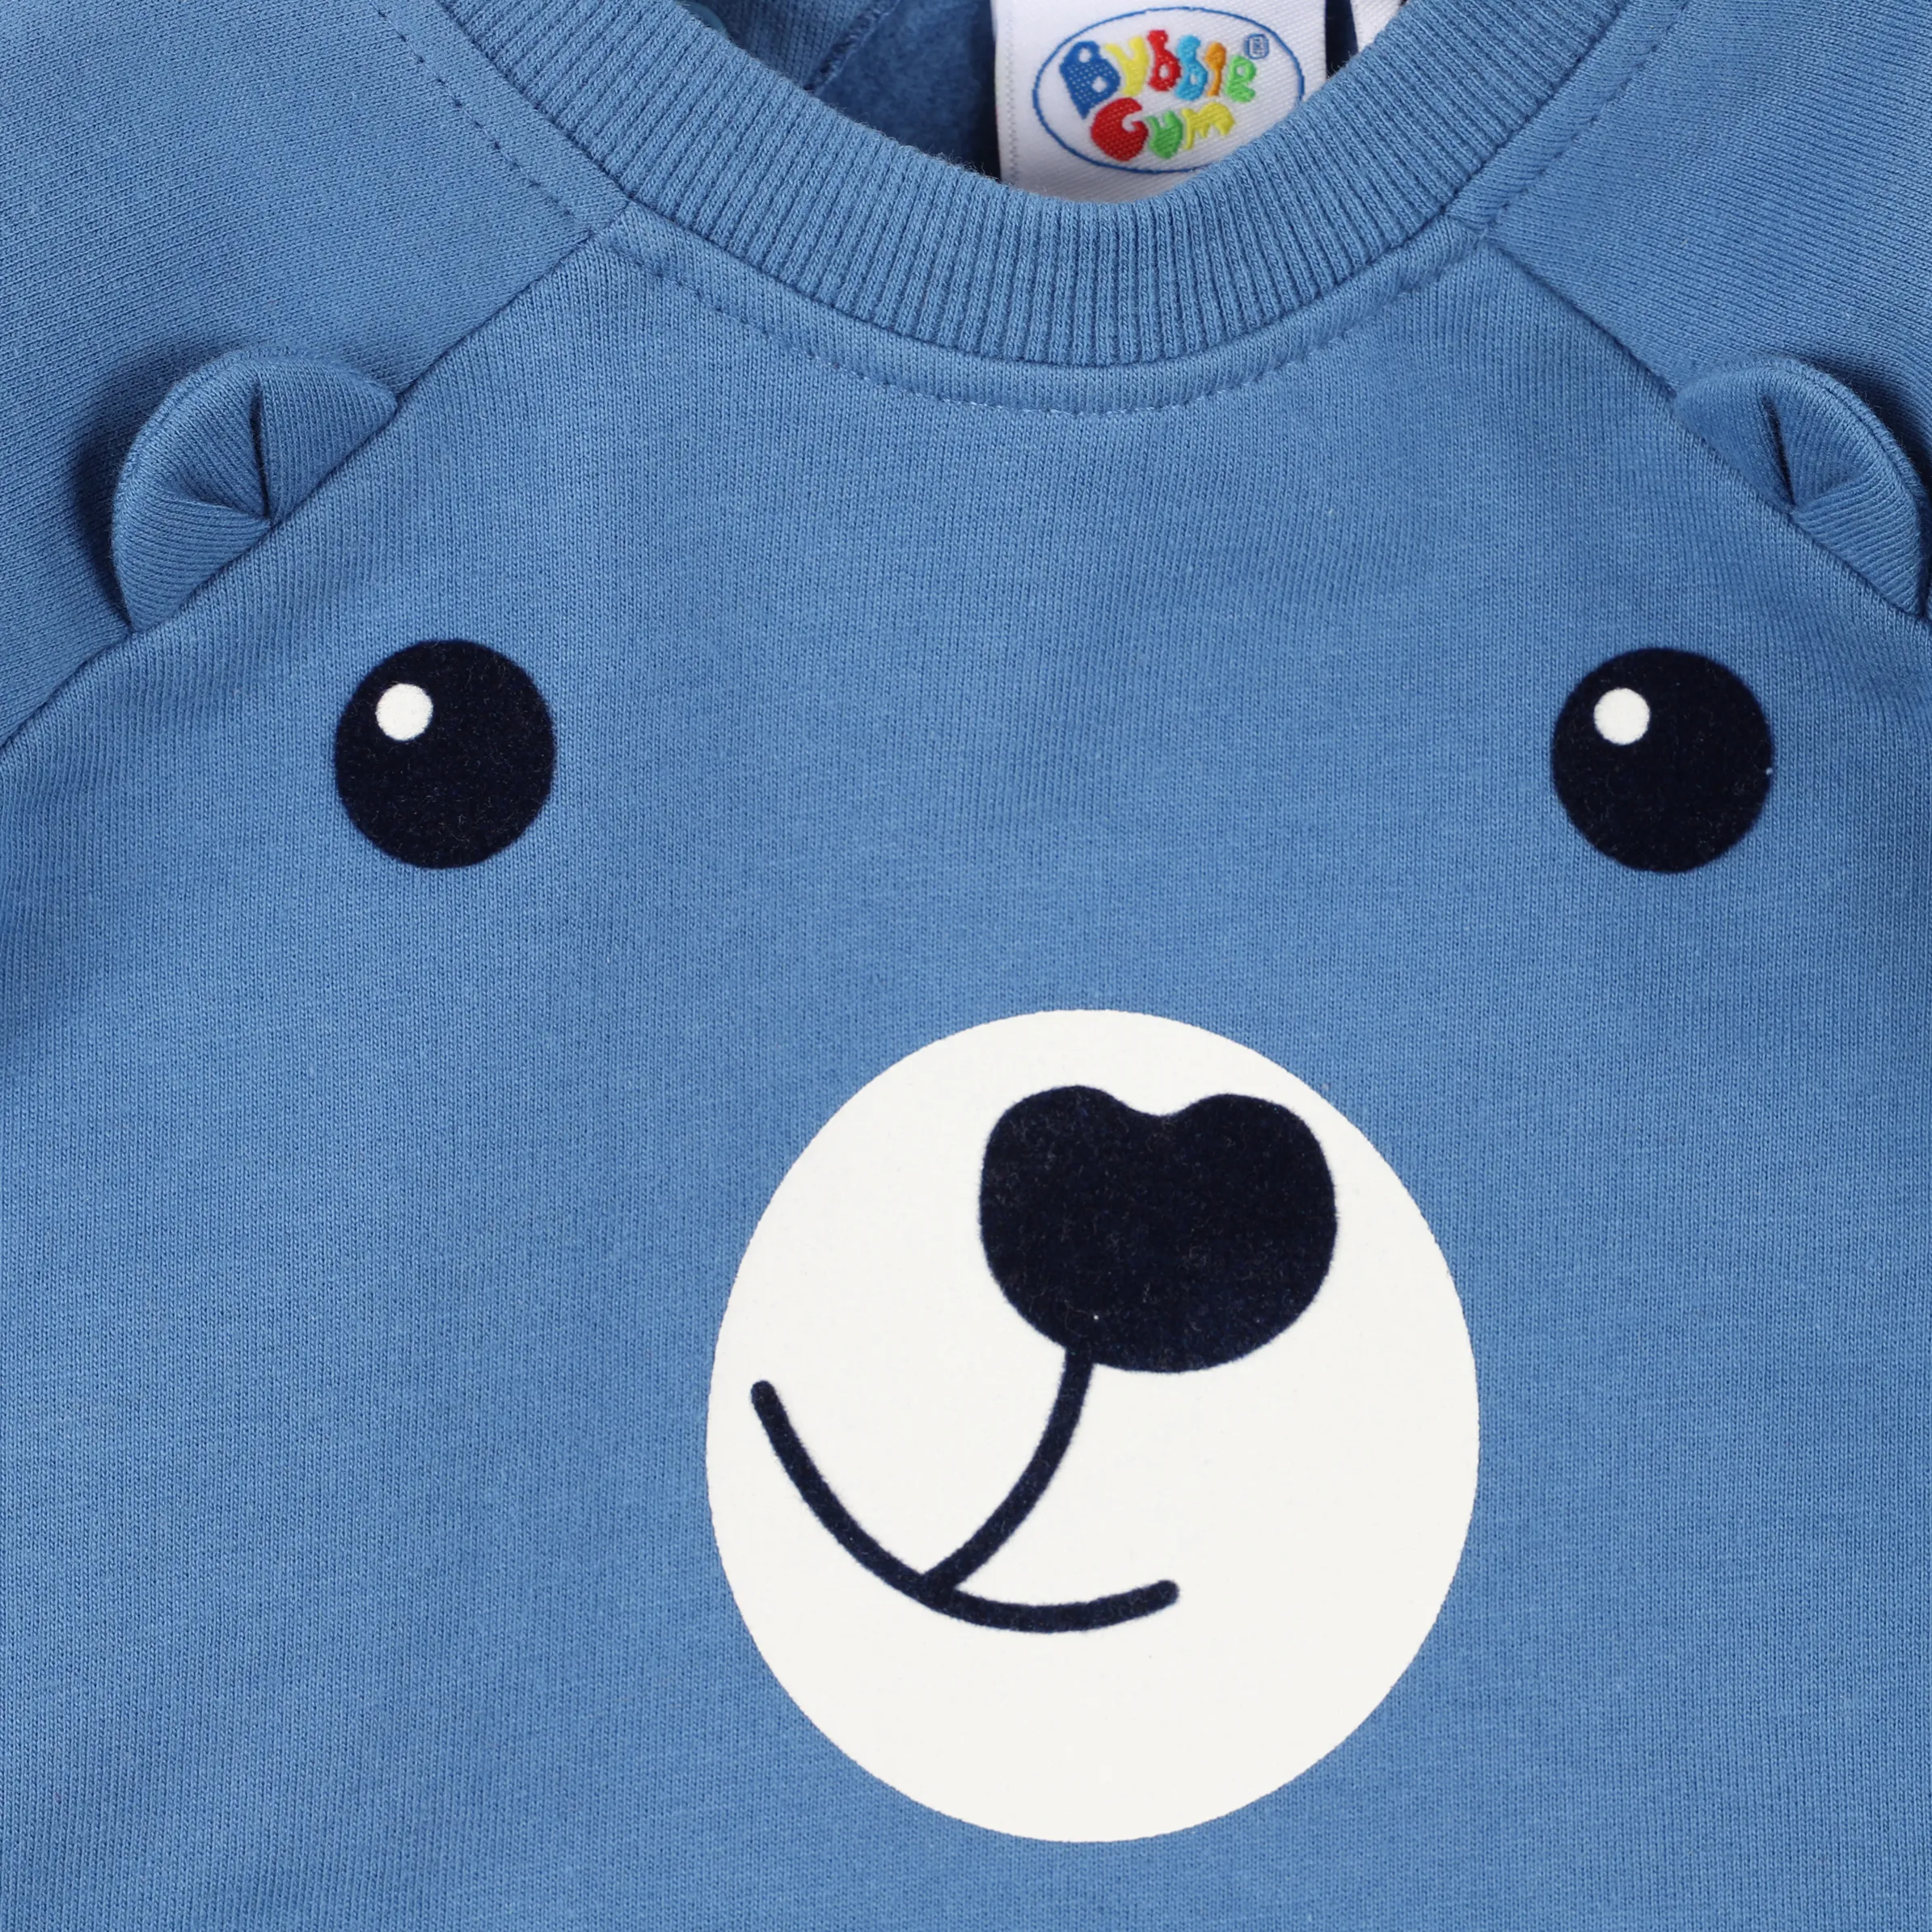 Bubble Gum BJ Sweatshirt in blau mit Bärchendruck Blau 884373 BLAU 3